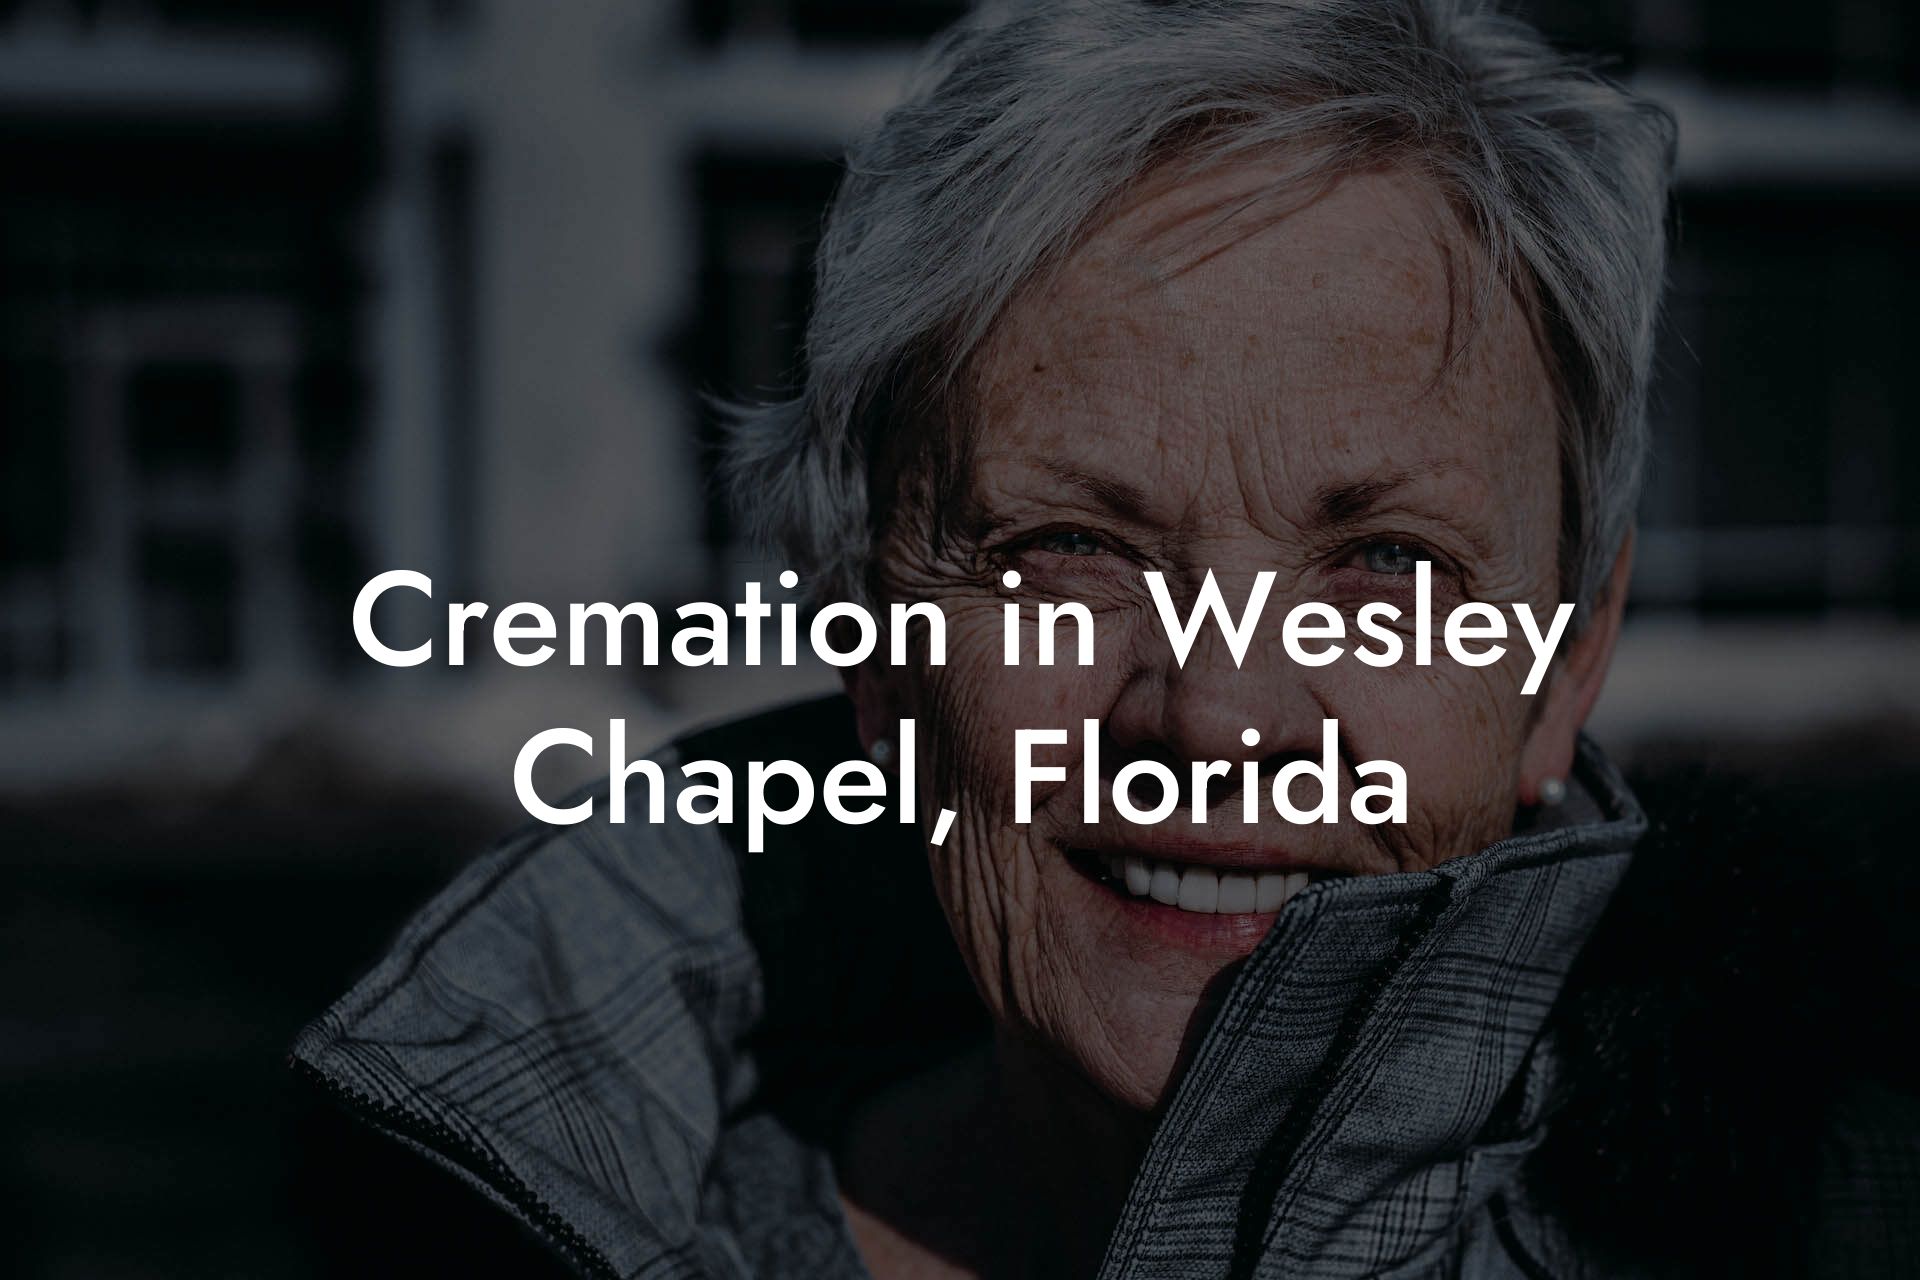 Cremation in Wesley Chapel, Florida